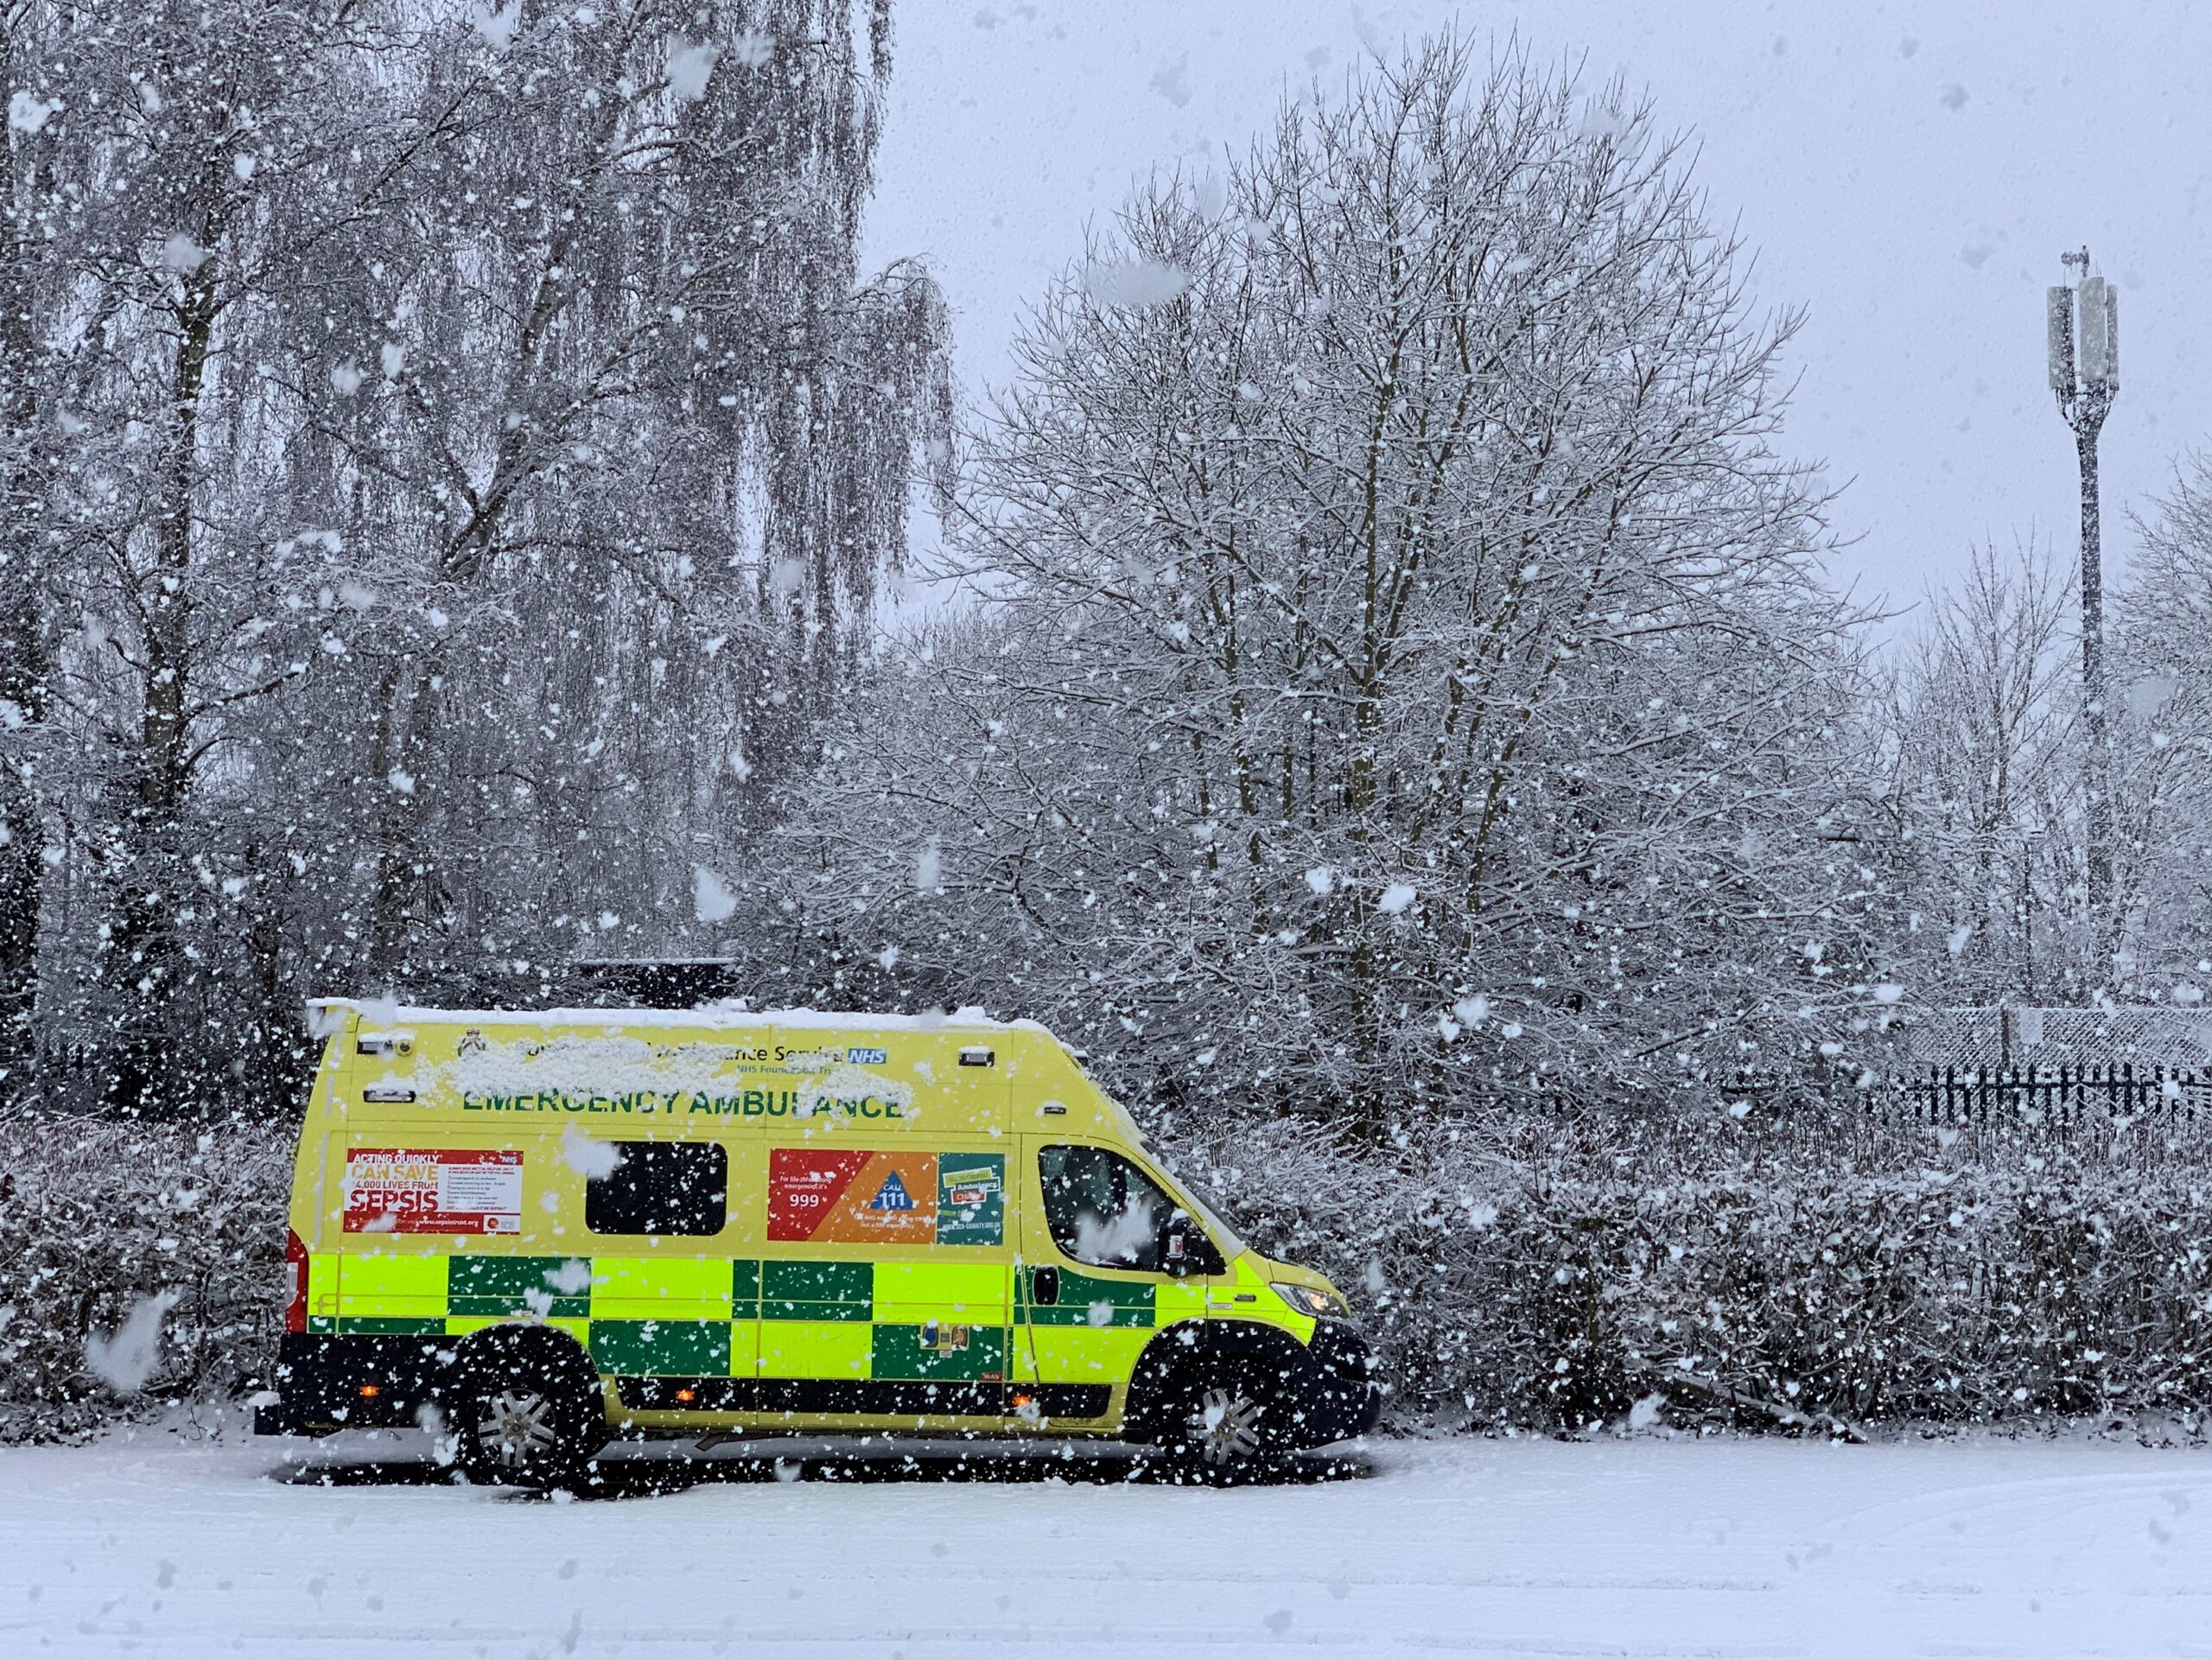 Emergency ambulance parked in winter snow scene